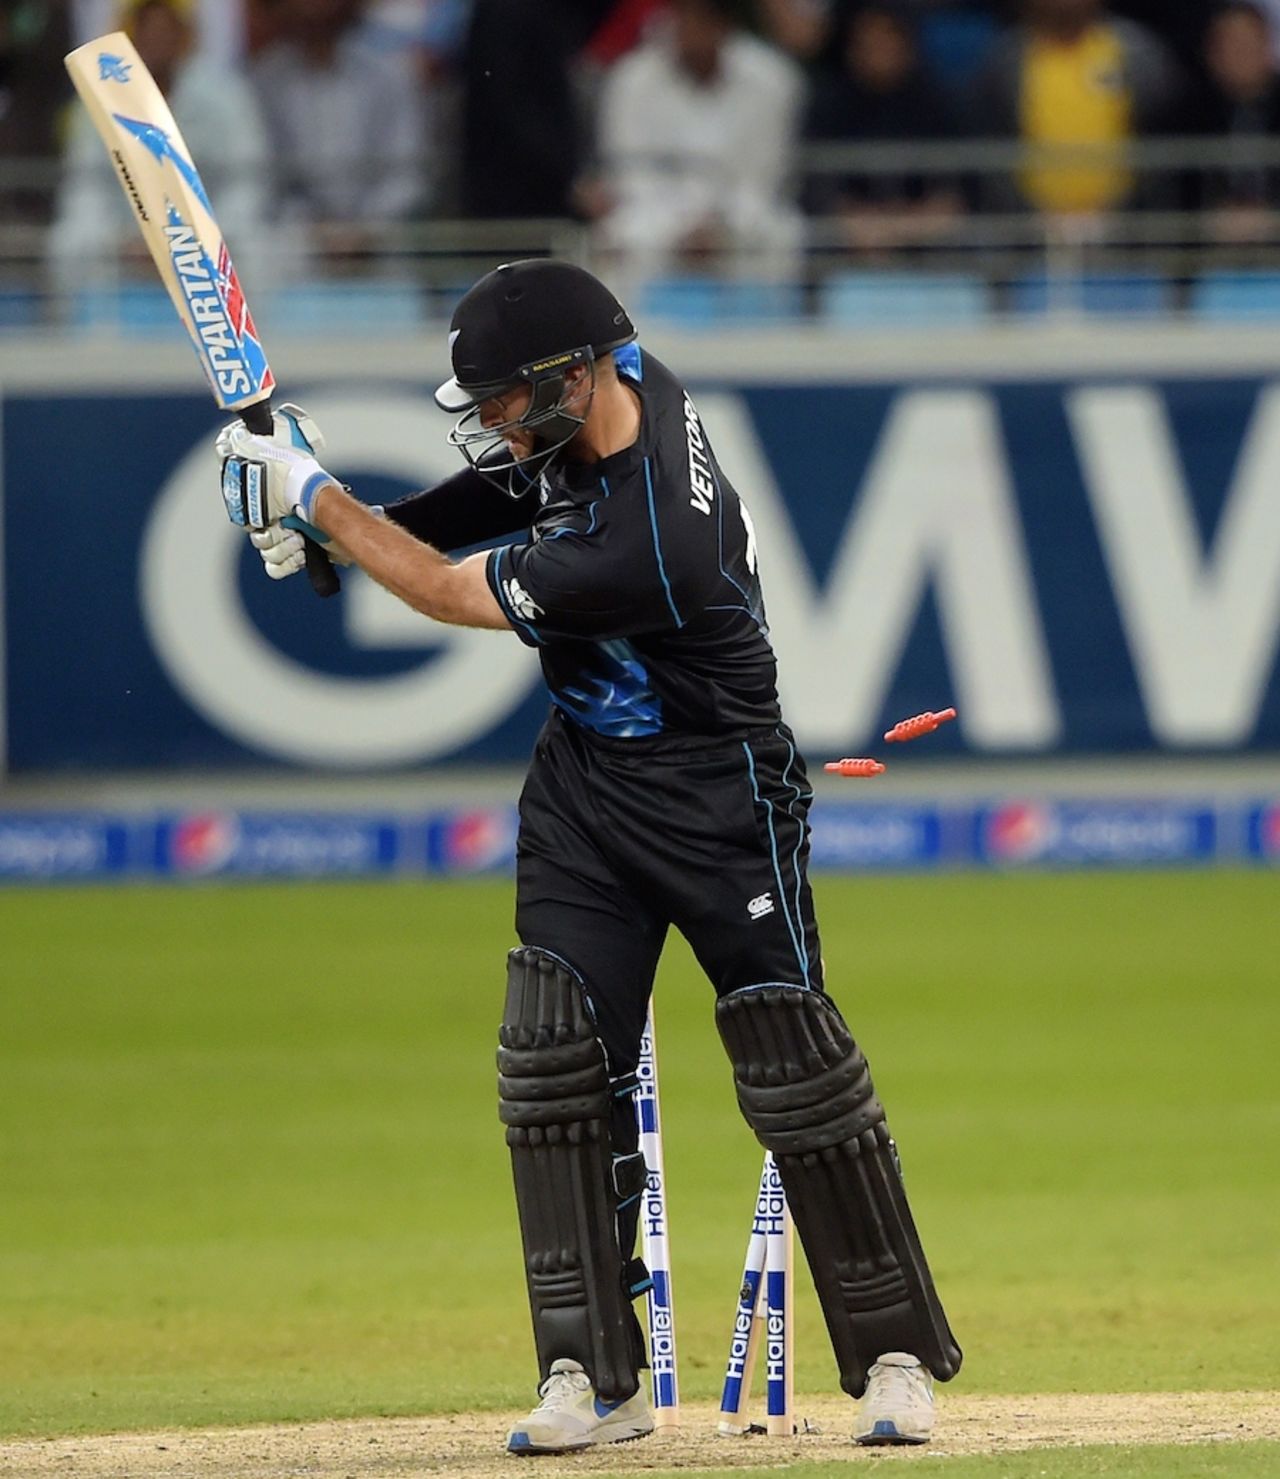 Daniel Vettori was bowled round his legs for 0, Pakistan v New Zealand, 2nd T20I, Dubai, December 5, 2014